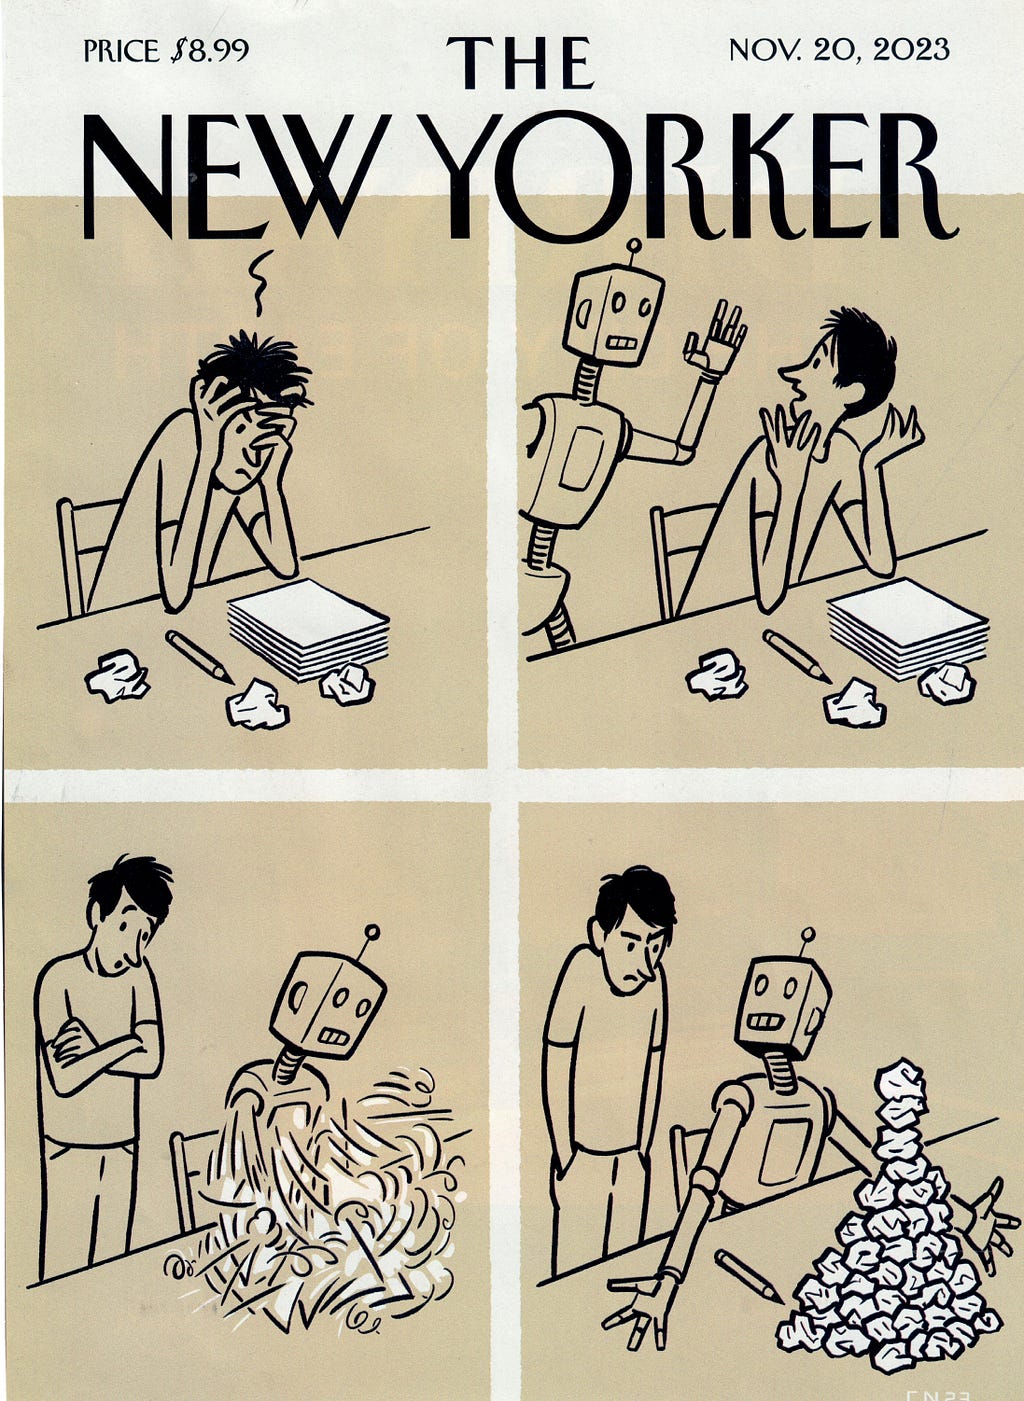 The new Yorker AI cartoon